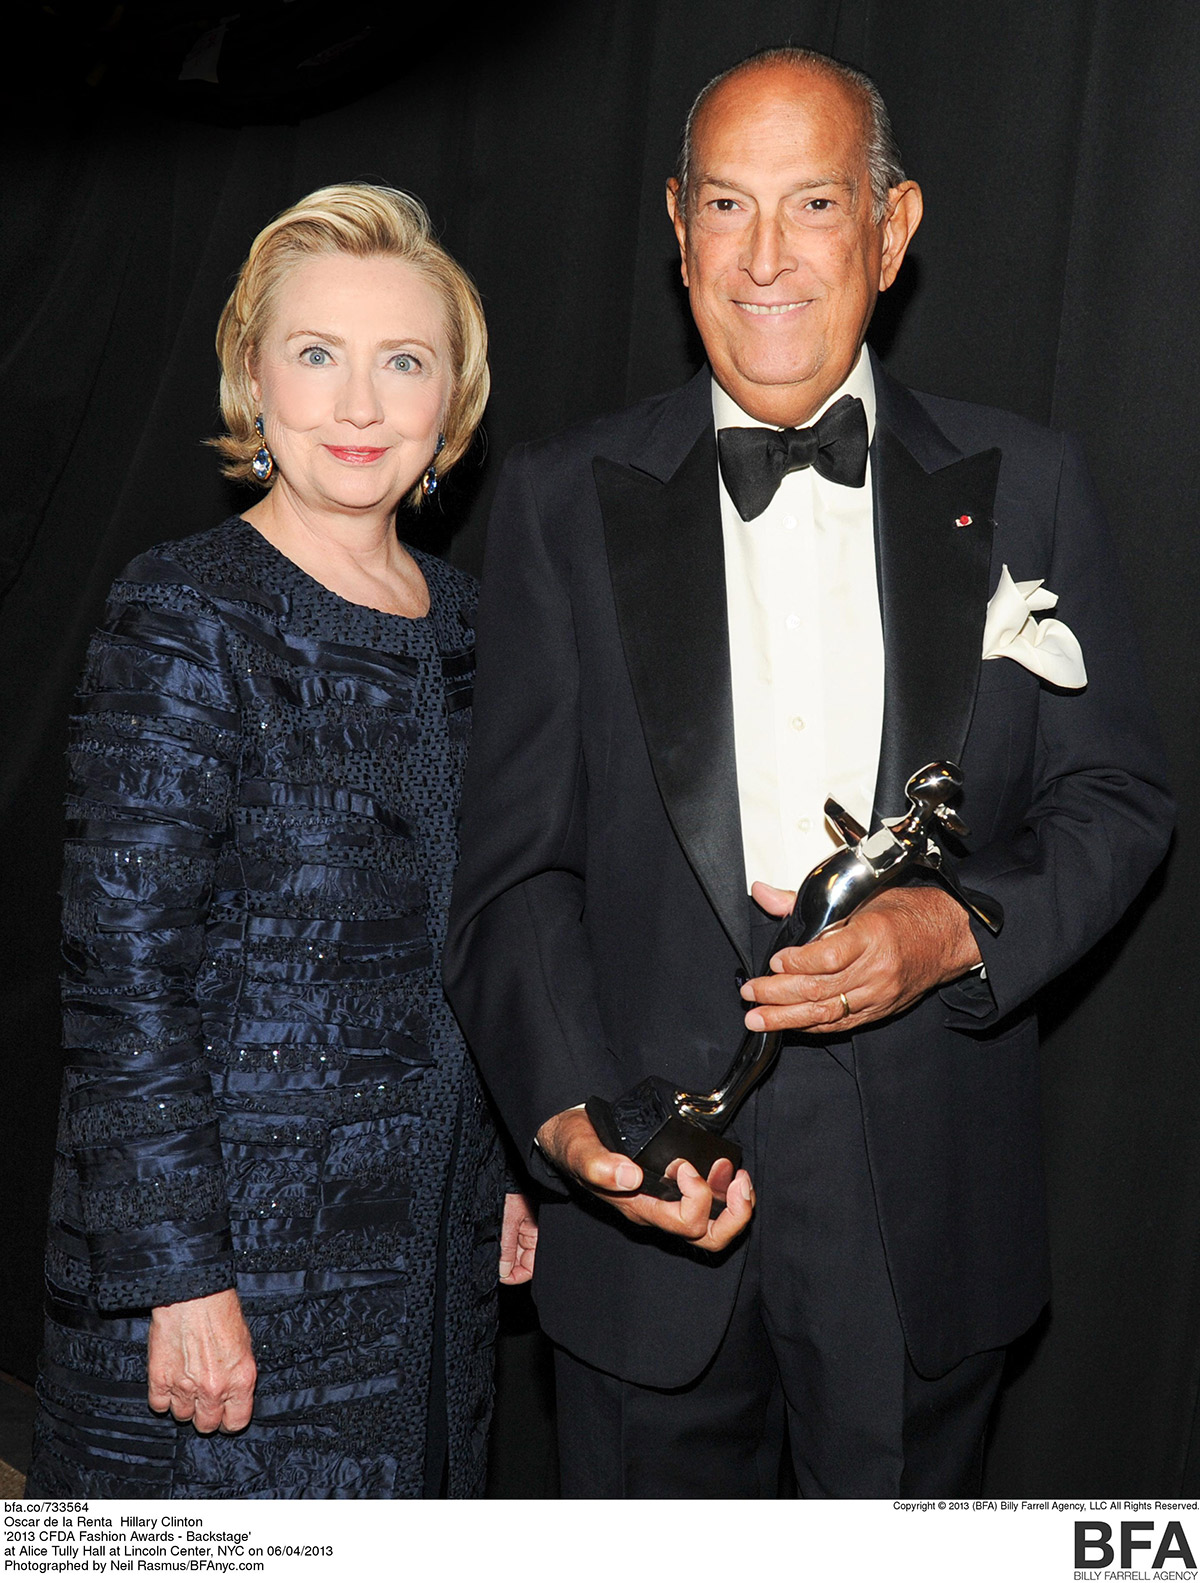 Hillary Clinton Oscar de la Renta CFDA awards 2013